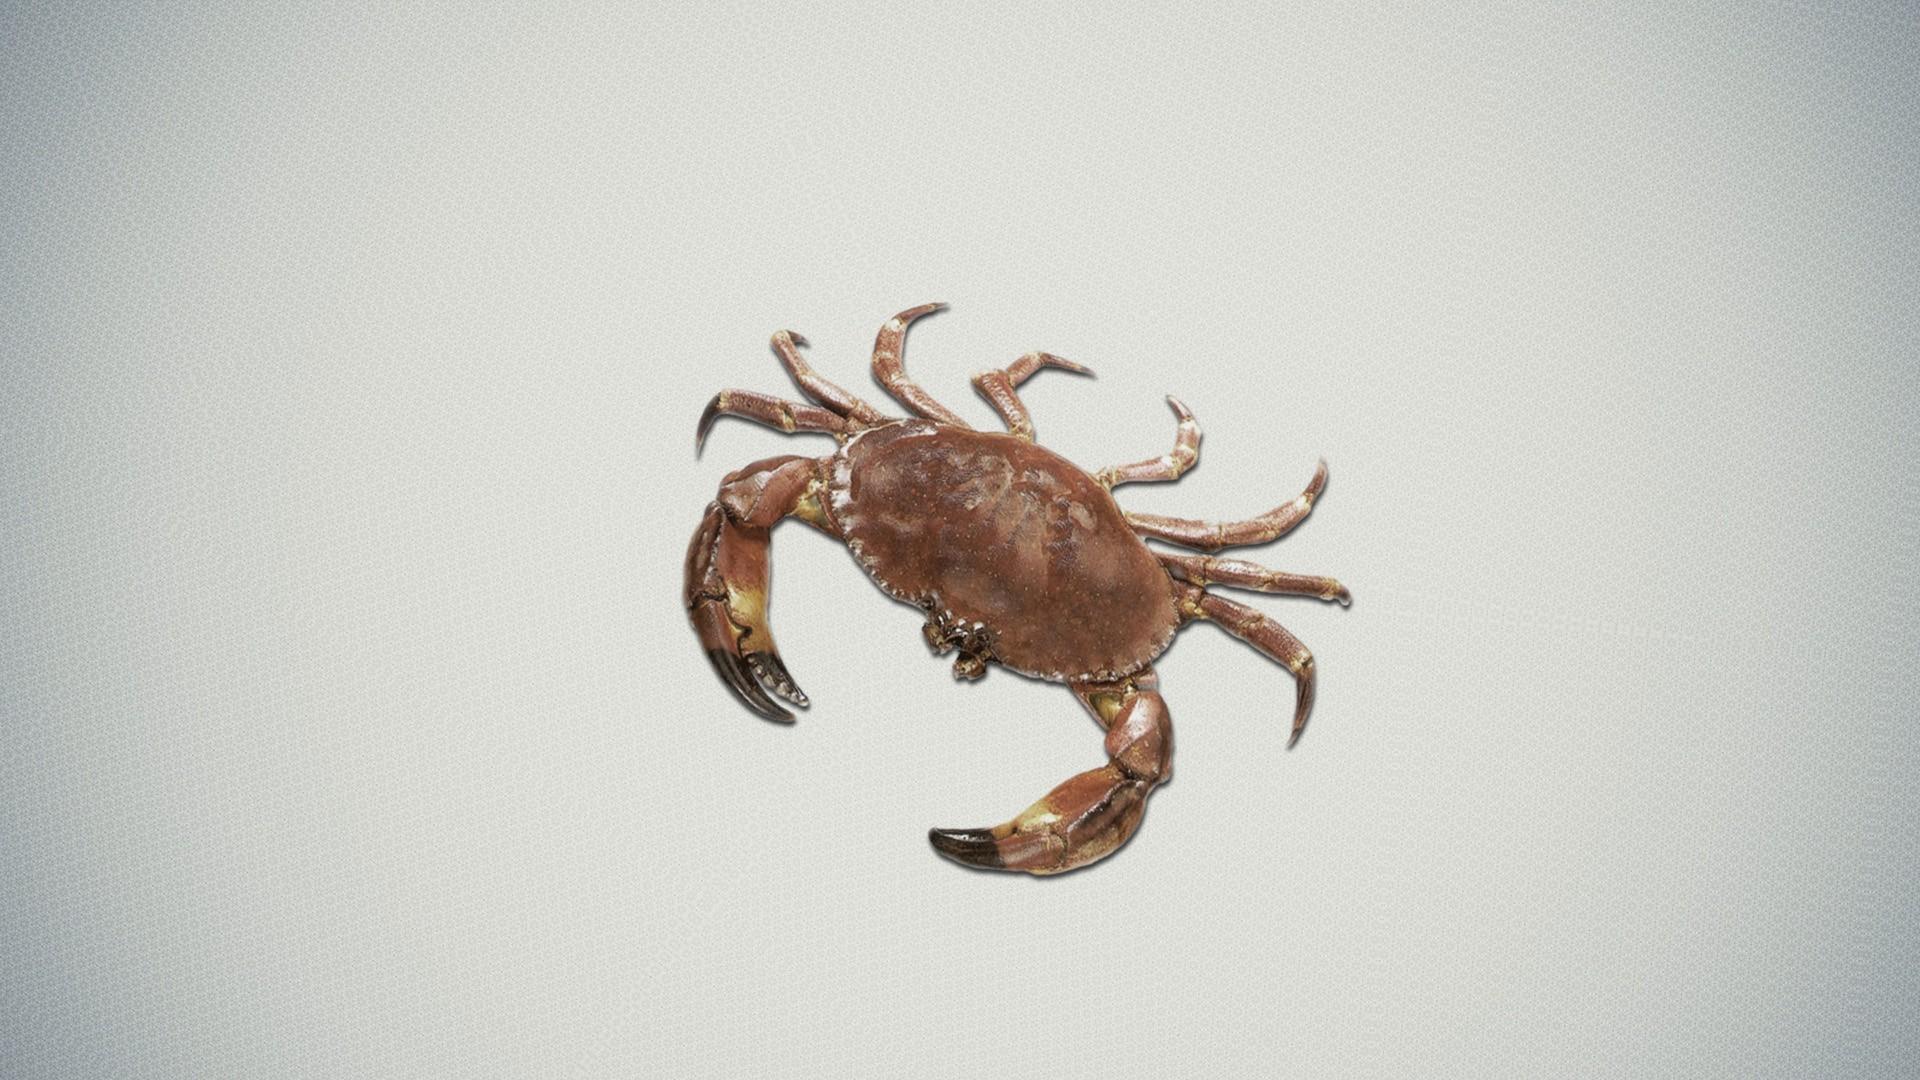 crab wallpaper for desktop. crab. Tokkoro.com